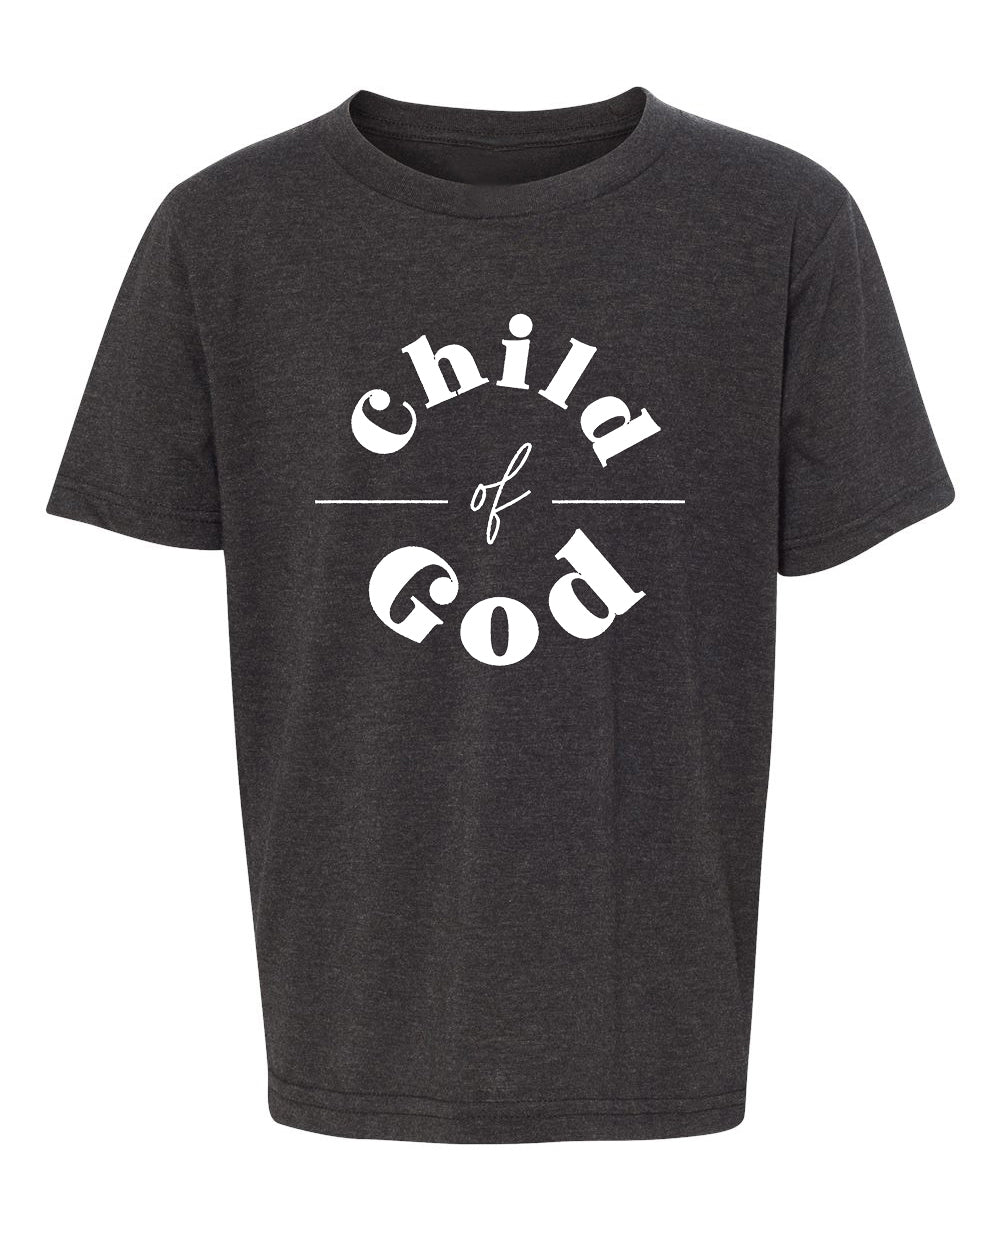 Child of God Kids Christian T Shirts - Mato & Hash